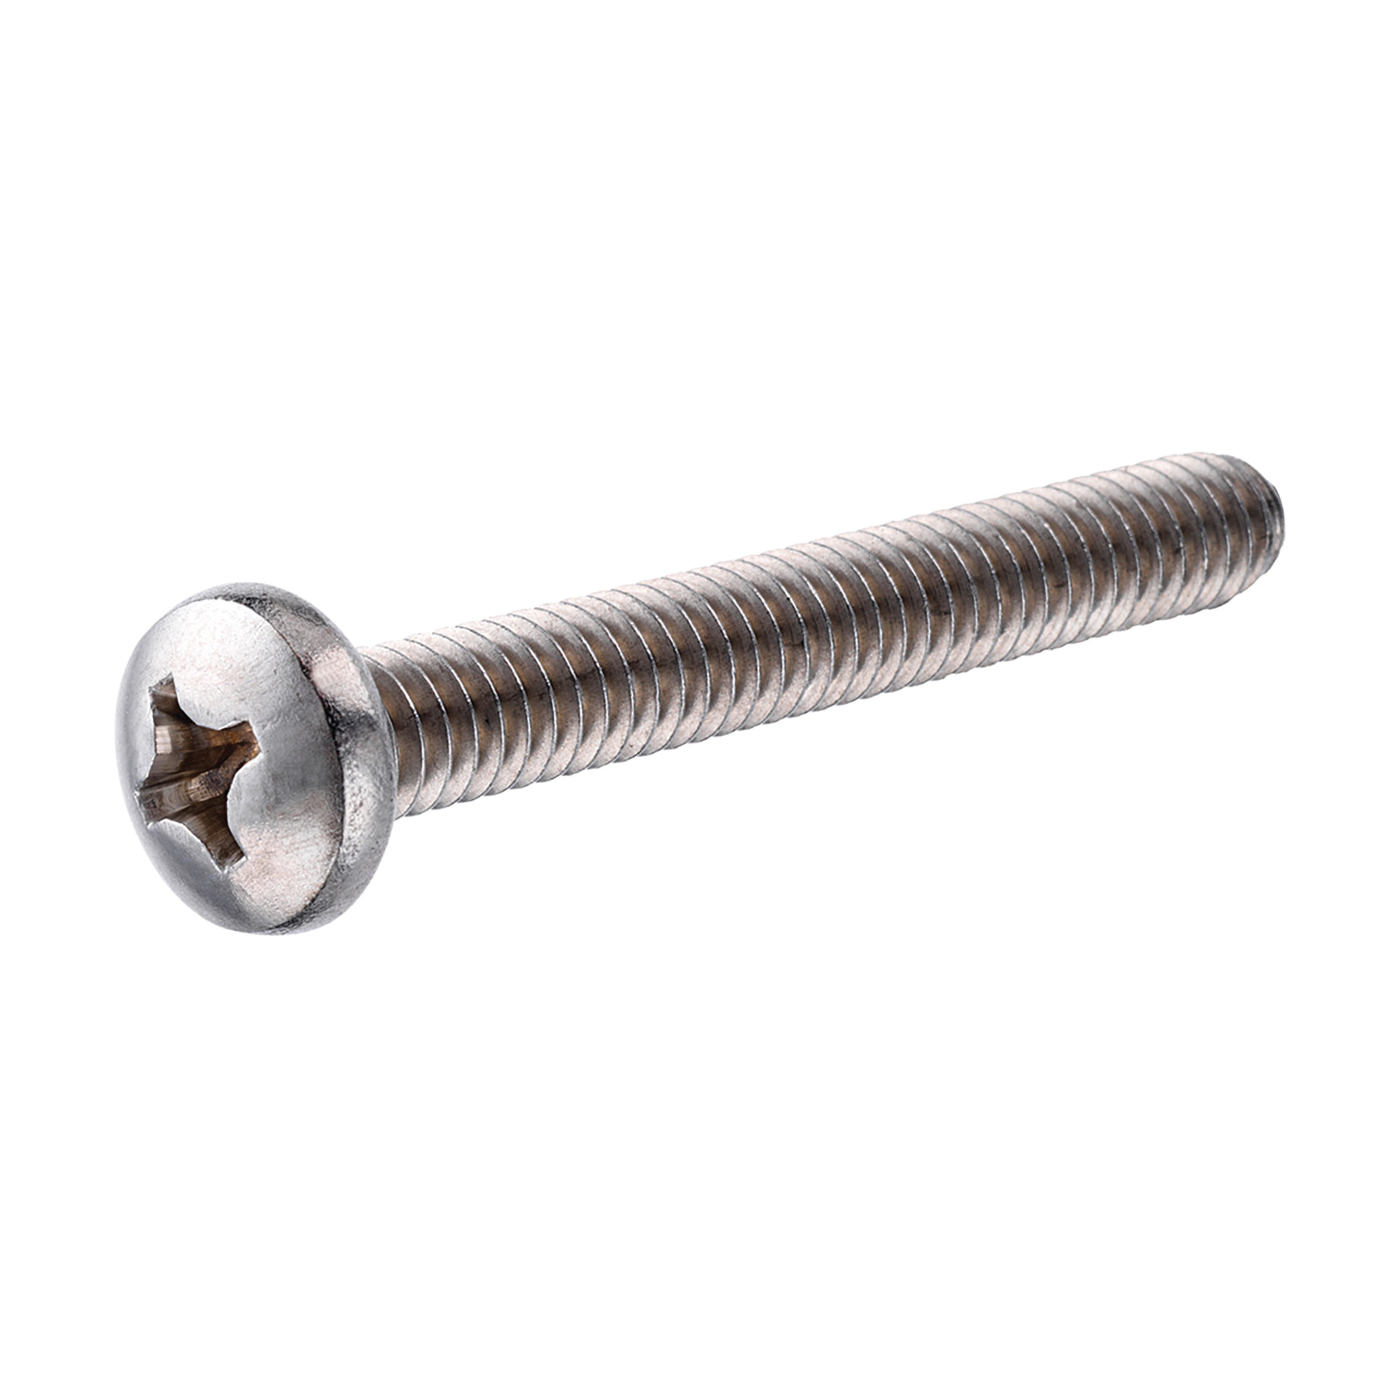 881139 Machine Screw, #2-56 Thread, 3/4 in L, Pan Head, Phillips Drive, Stainless Steel